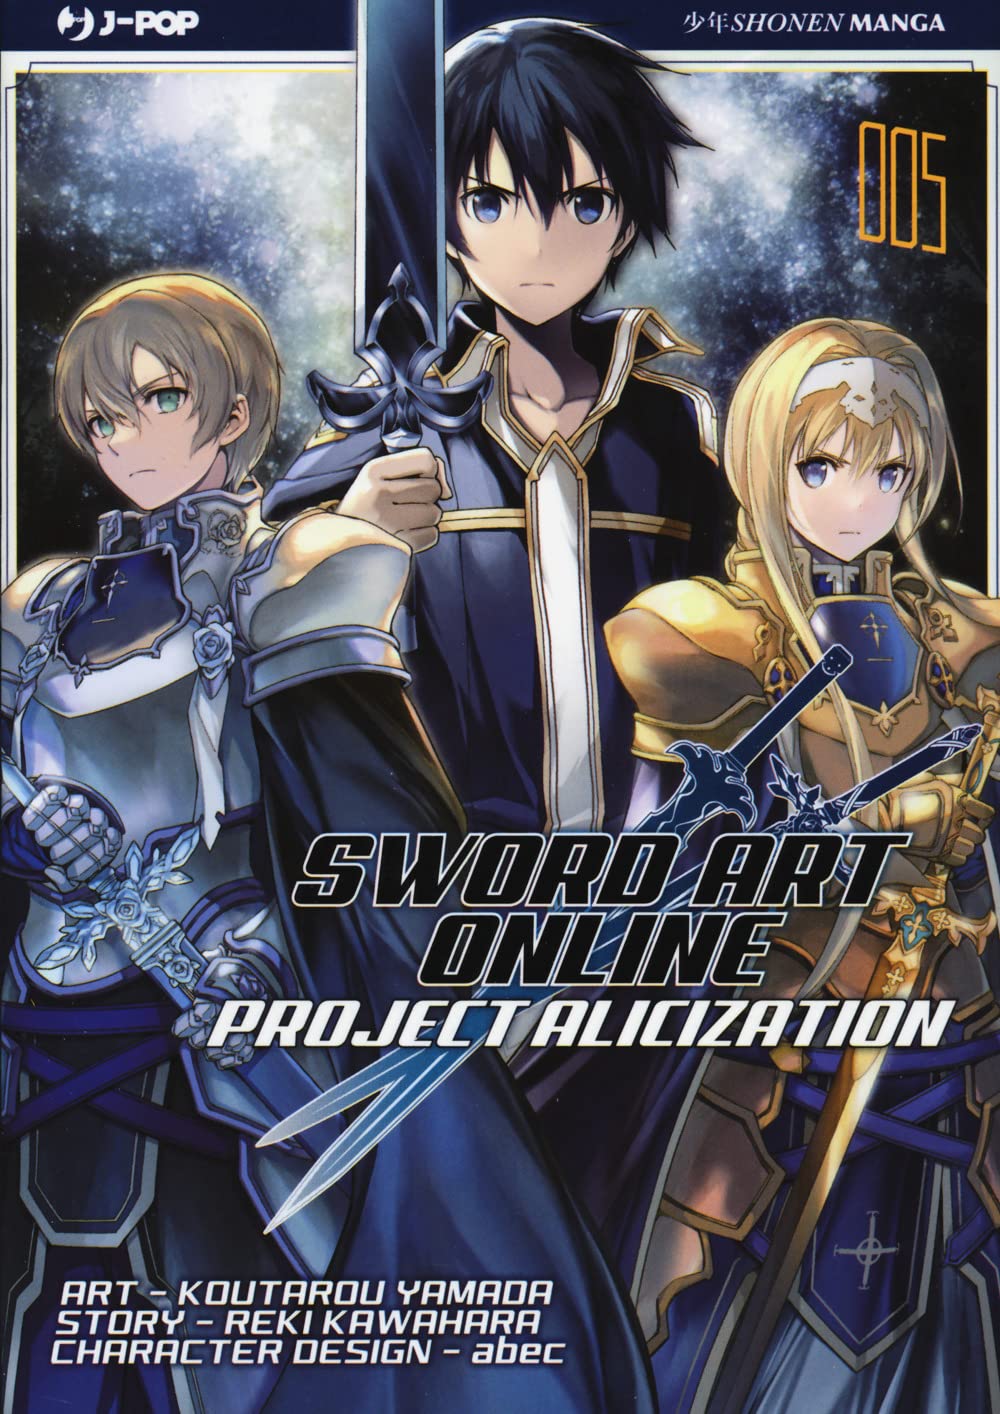 Manga – J-Pop – Sword Art Online Alicization #5